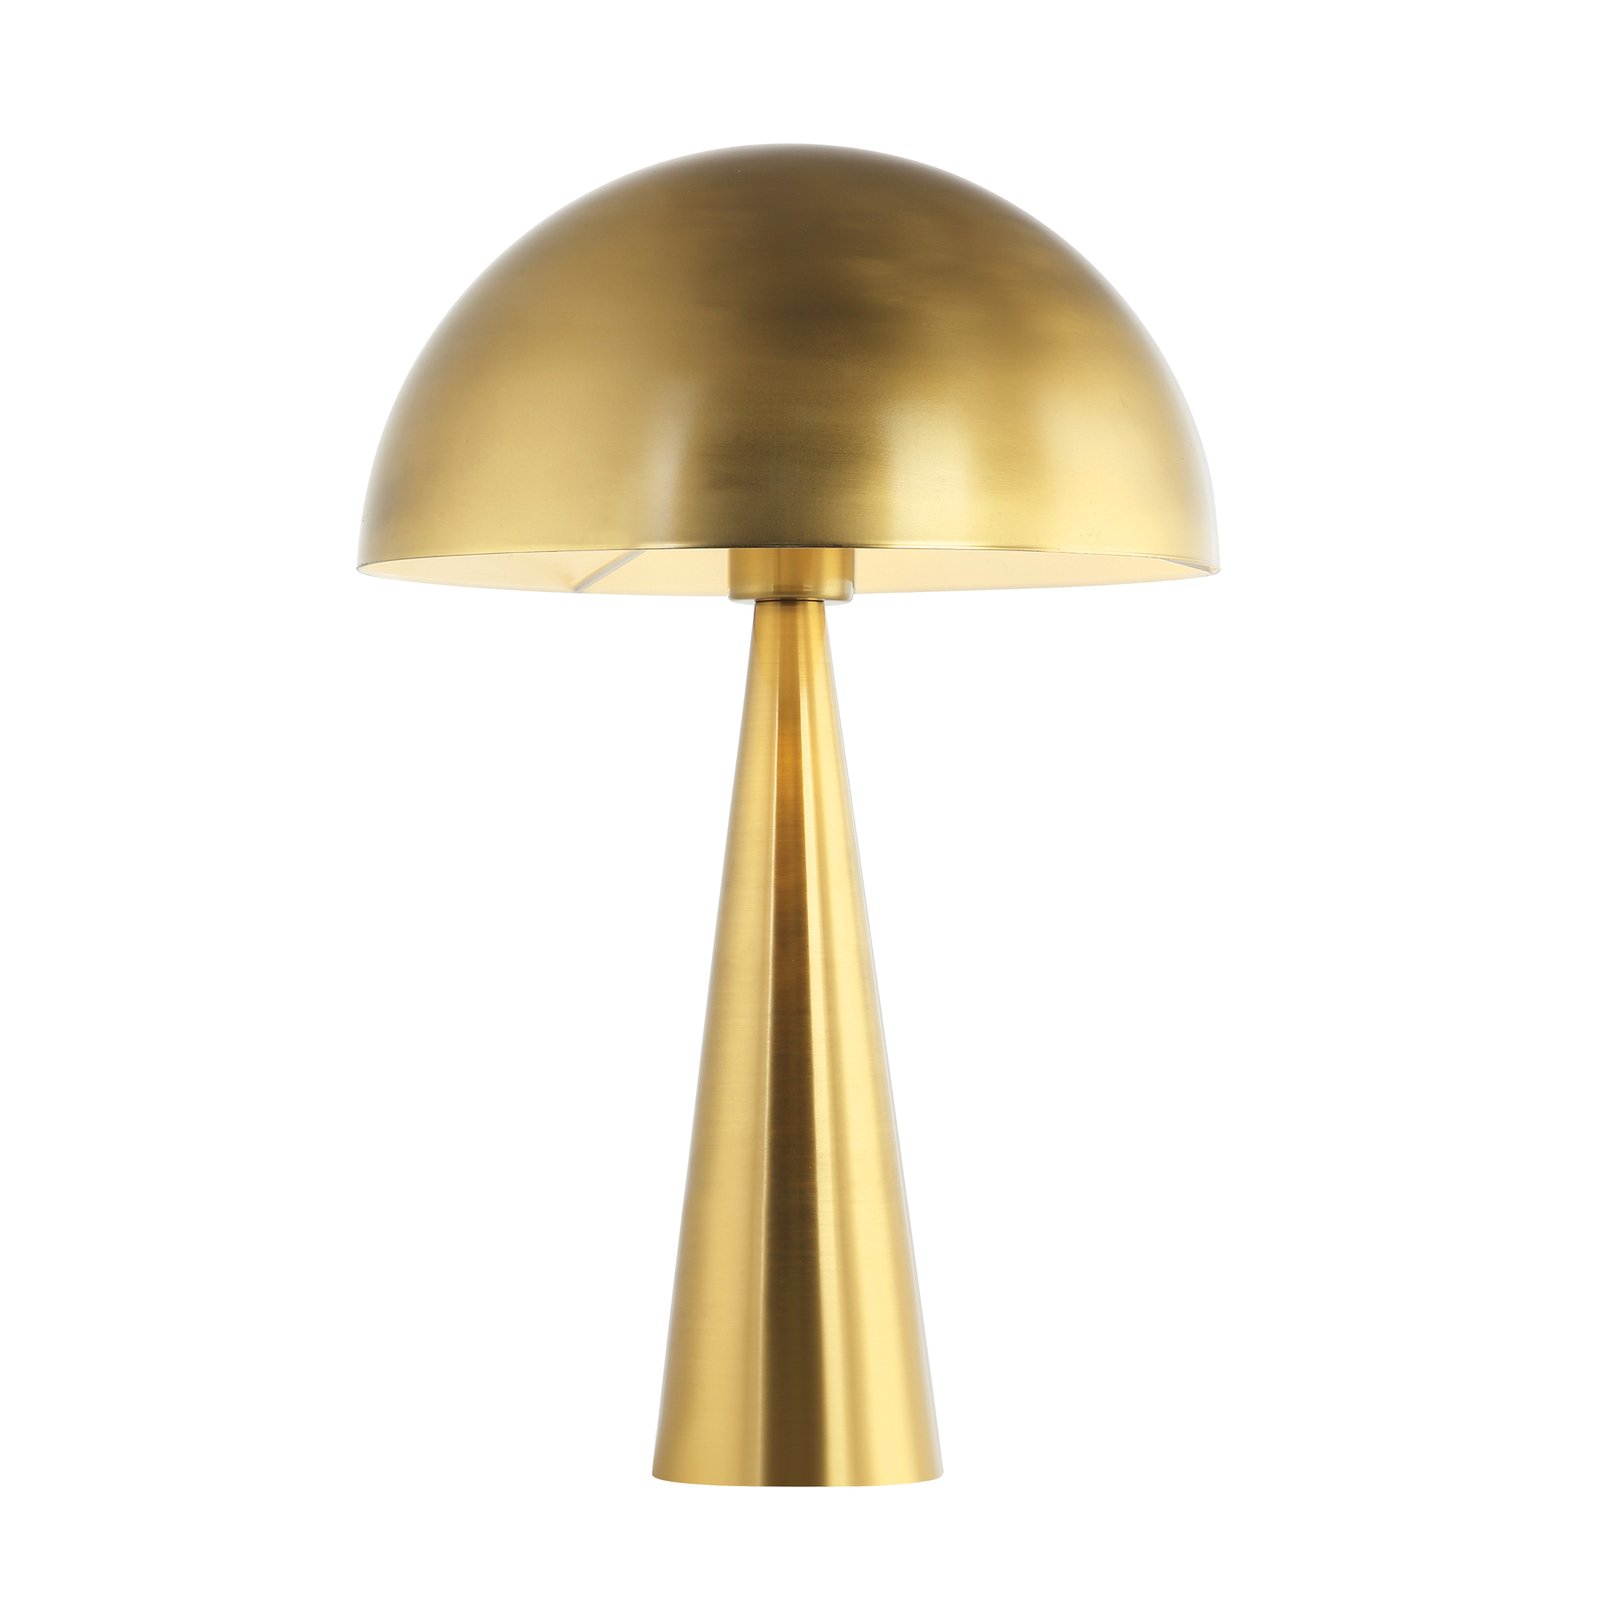 Bordslampa 2021 metall, höjd 47 cm matt guld